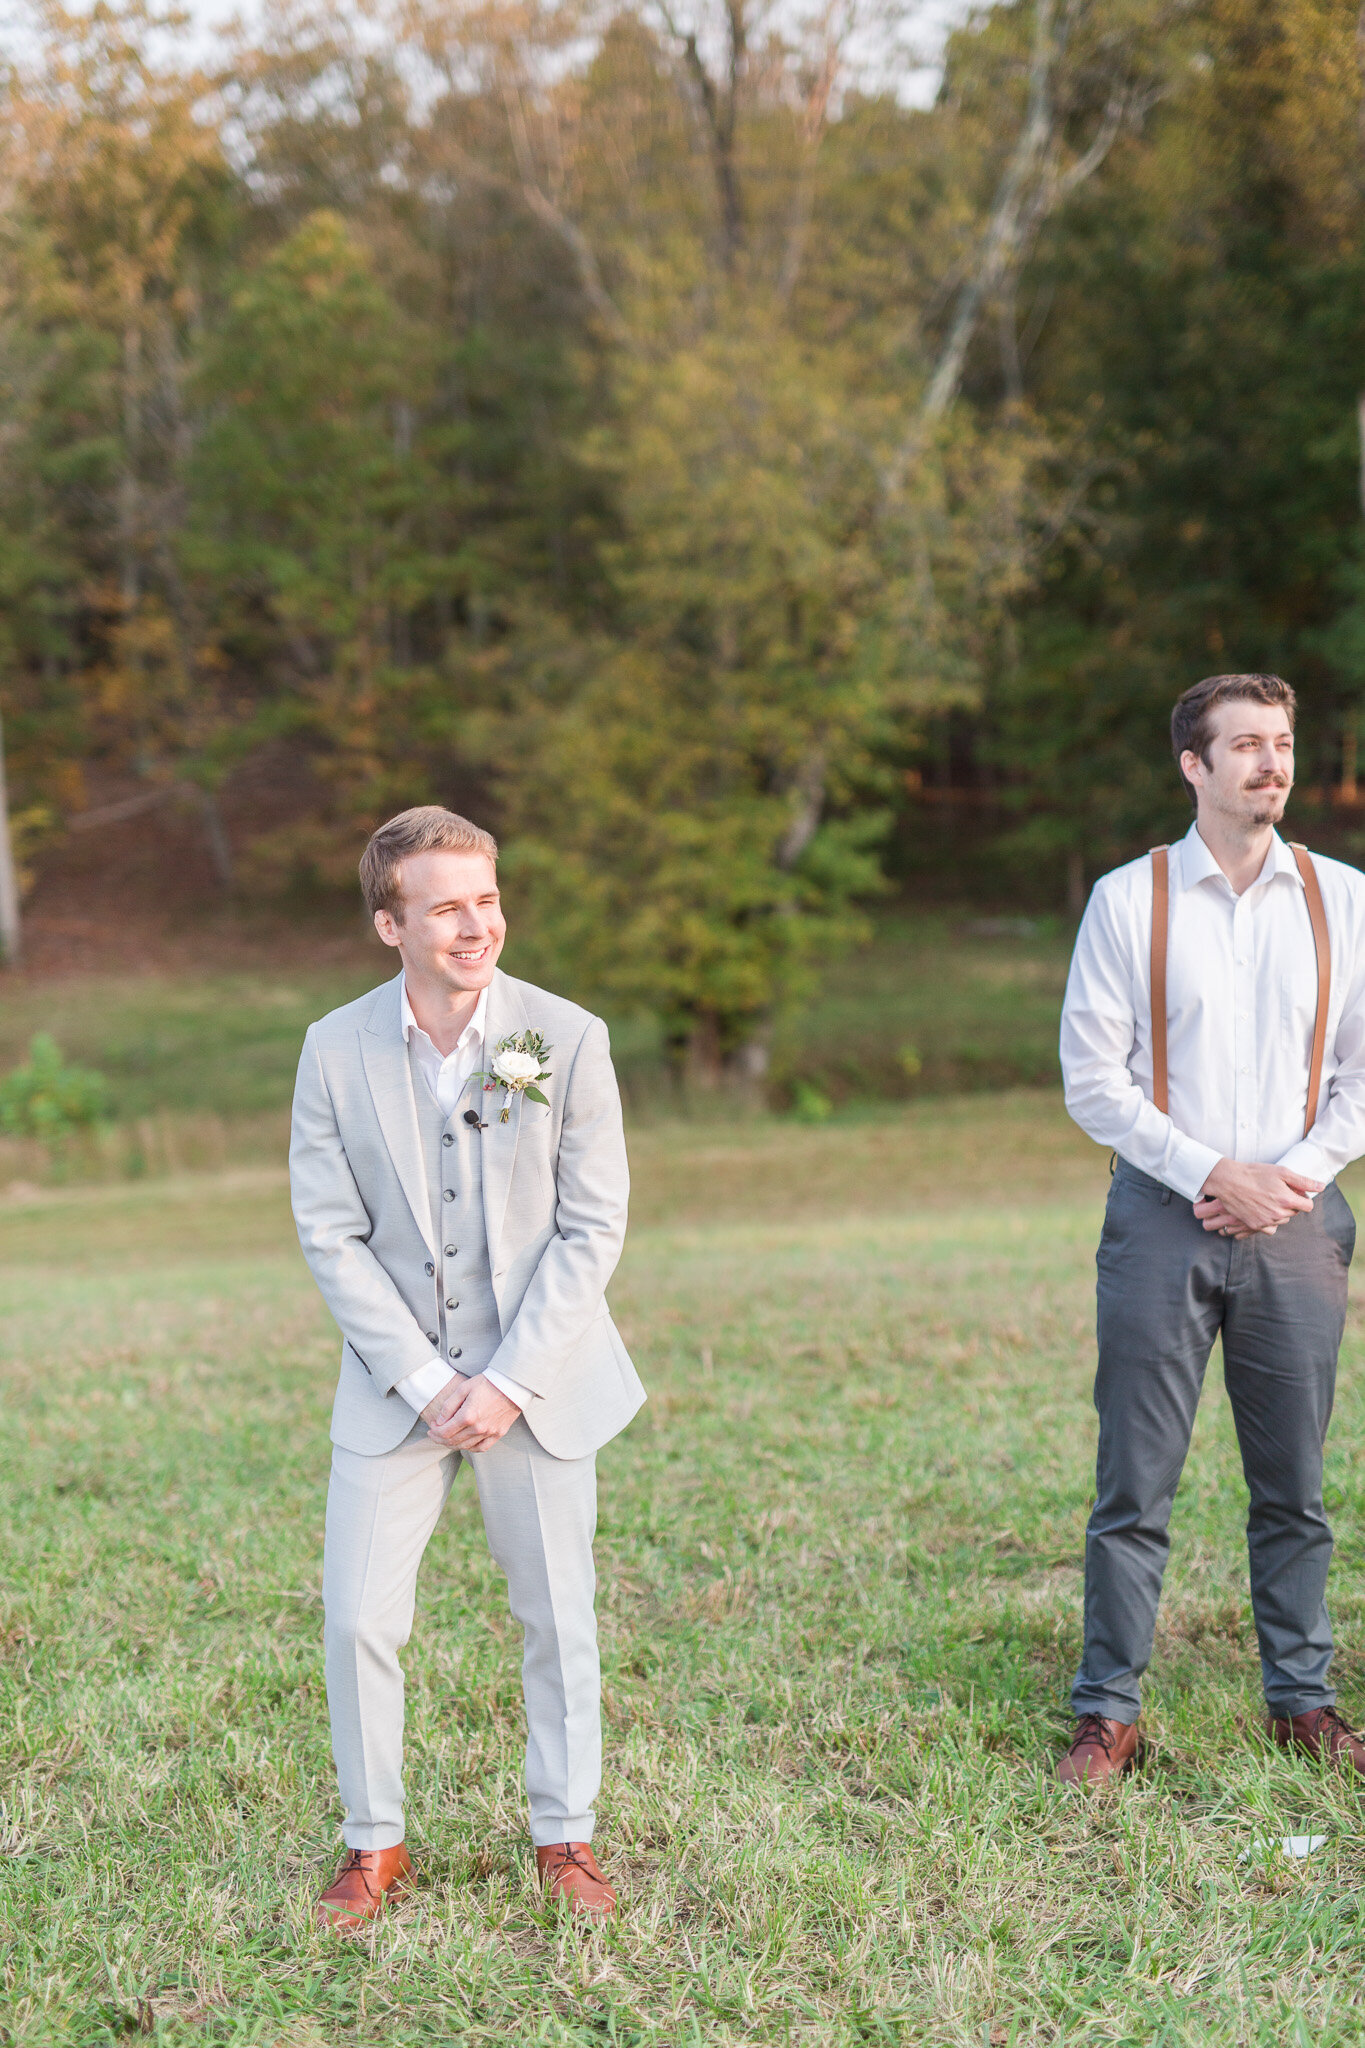 Riverview Manor in Hurt, Virginia || Lynchburg, VA Wedding Photographer || Fall Wedding in Central Virginia || www.ashleyeiban.com